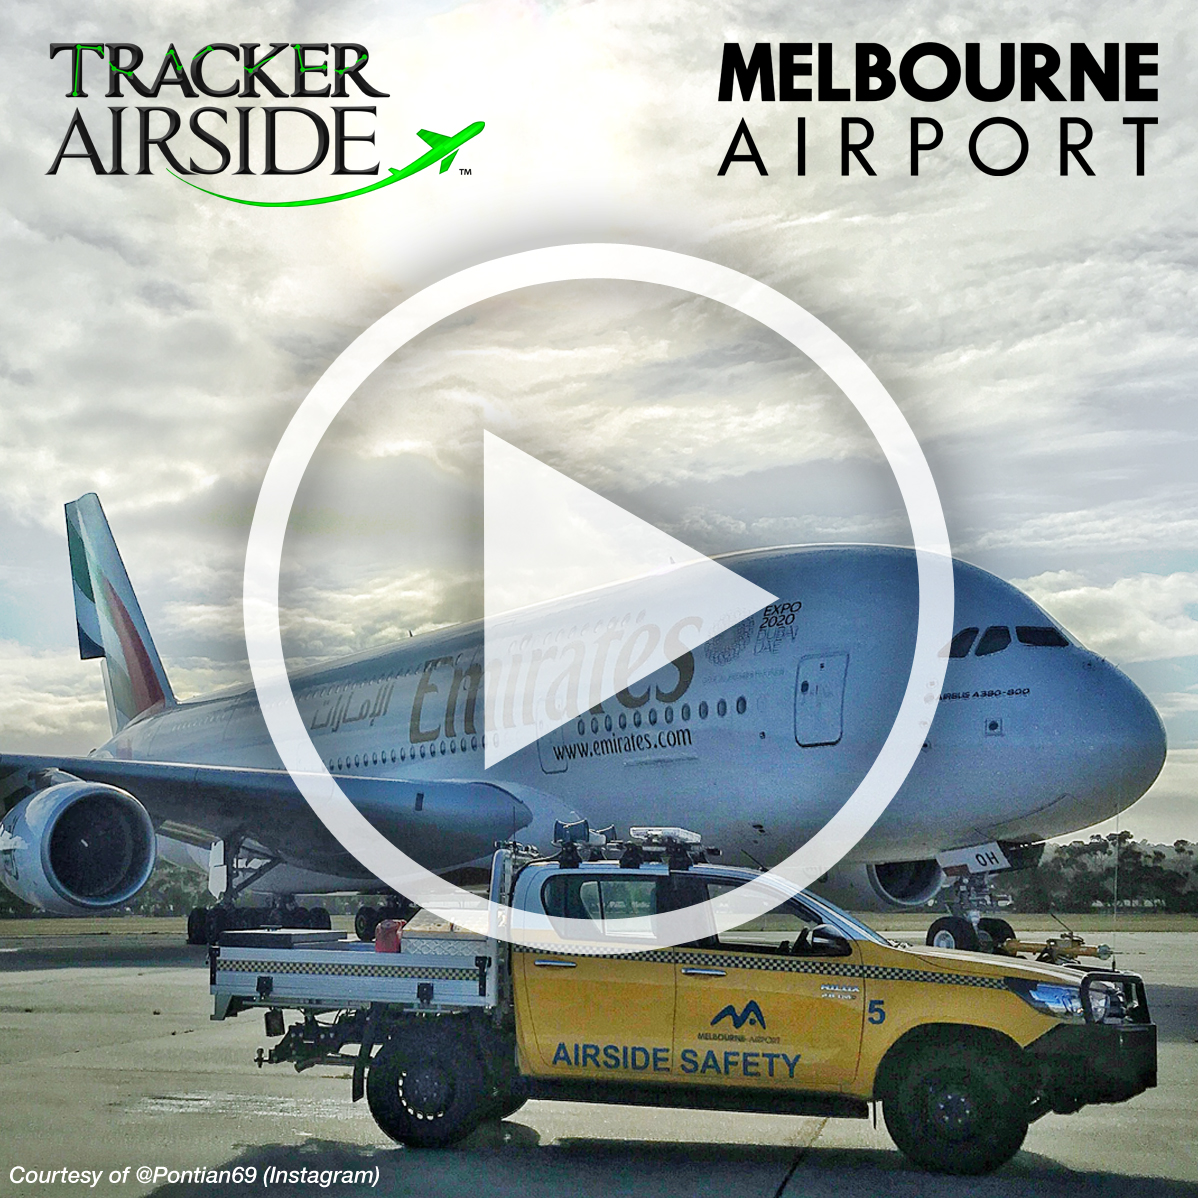 Melbourne Airport TrackerAIRSIDE Video